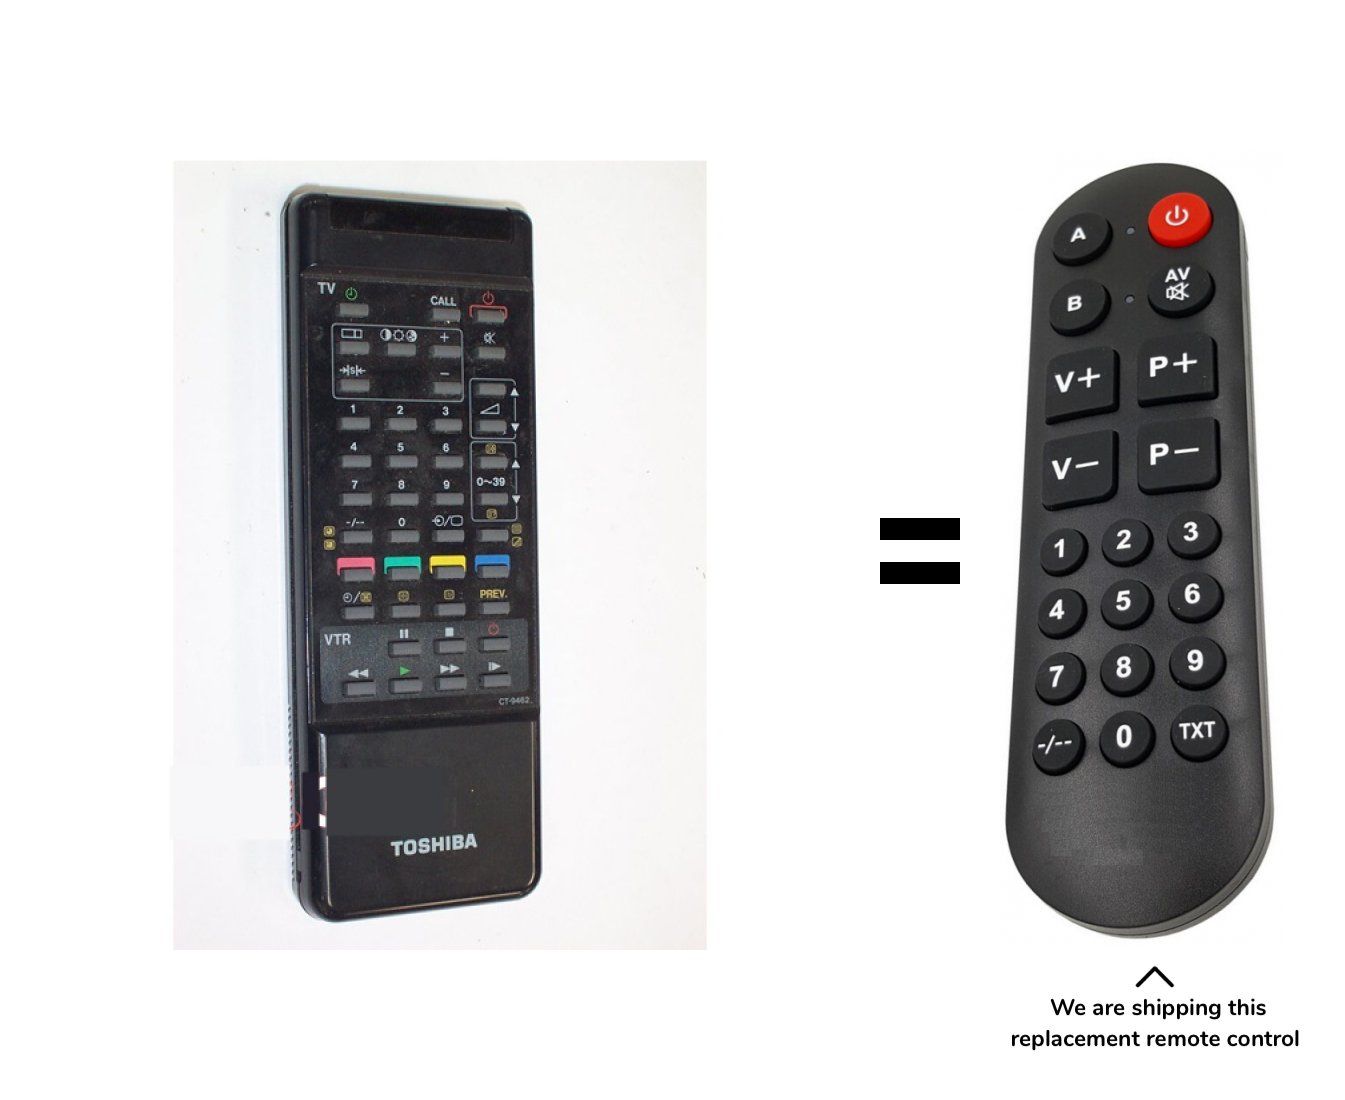 Toshiba CT-9580 remote control for seniors